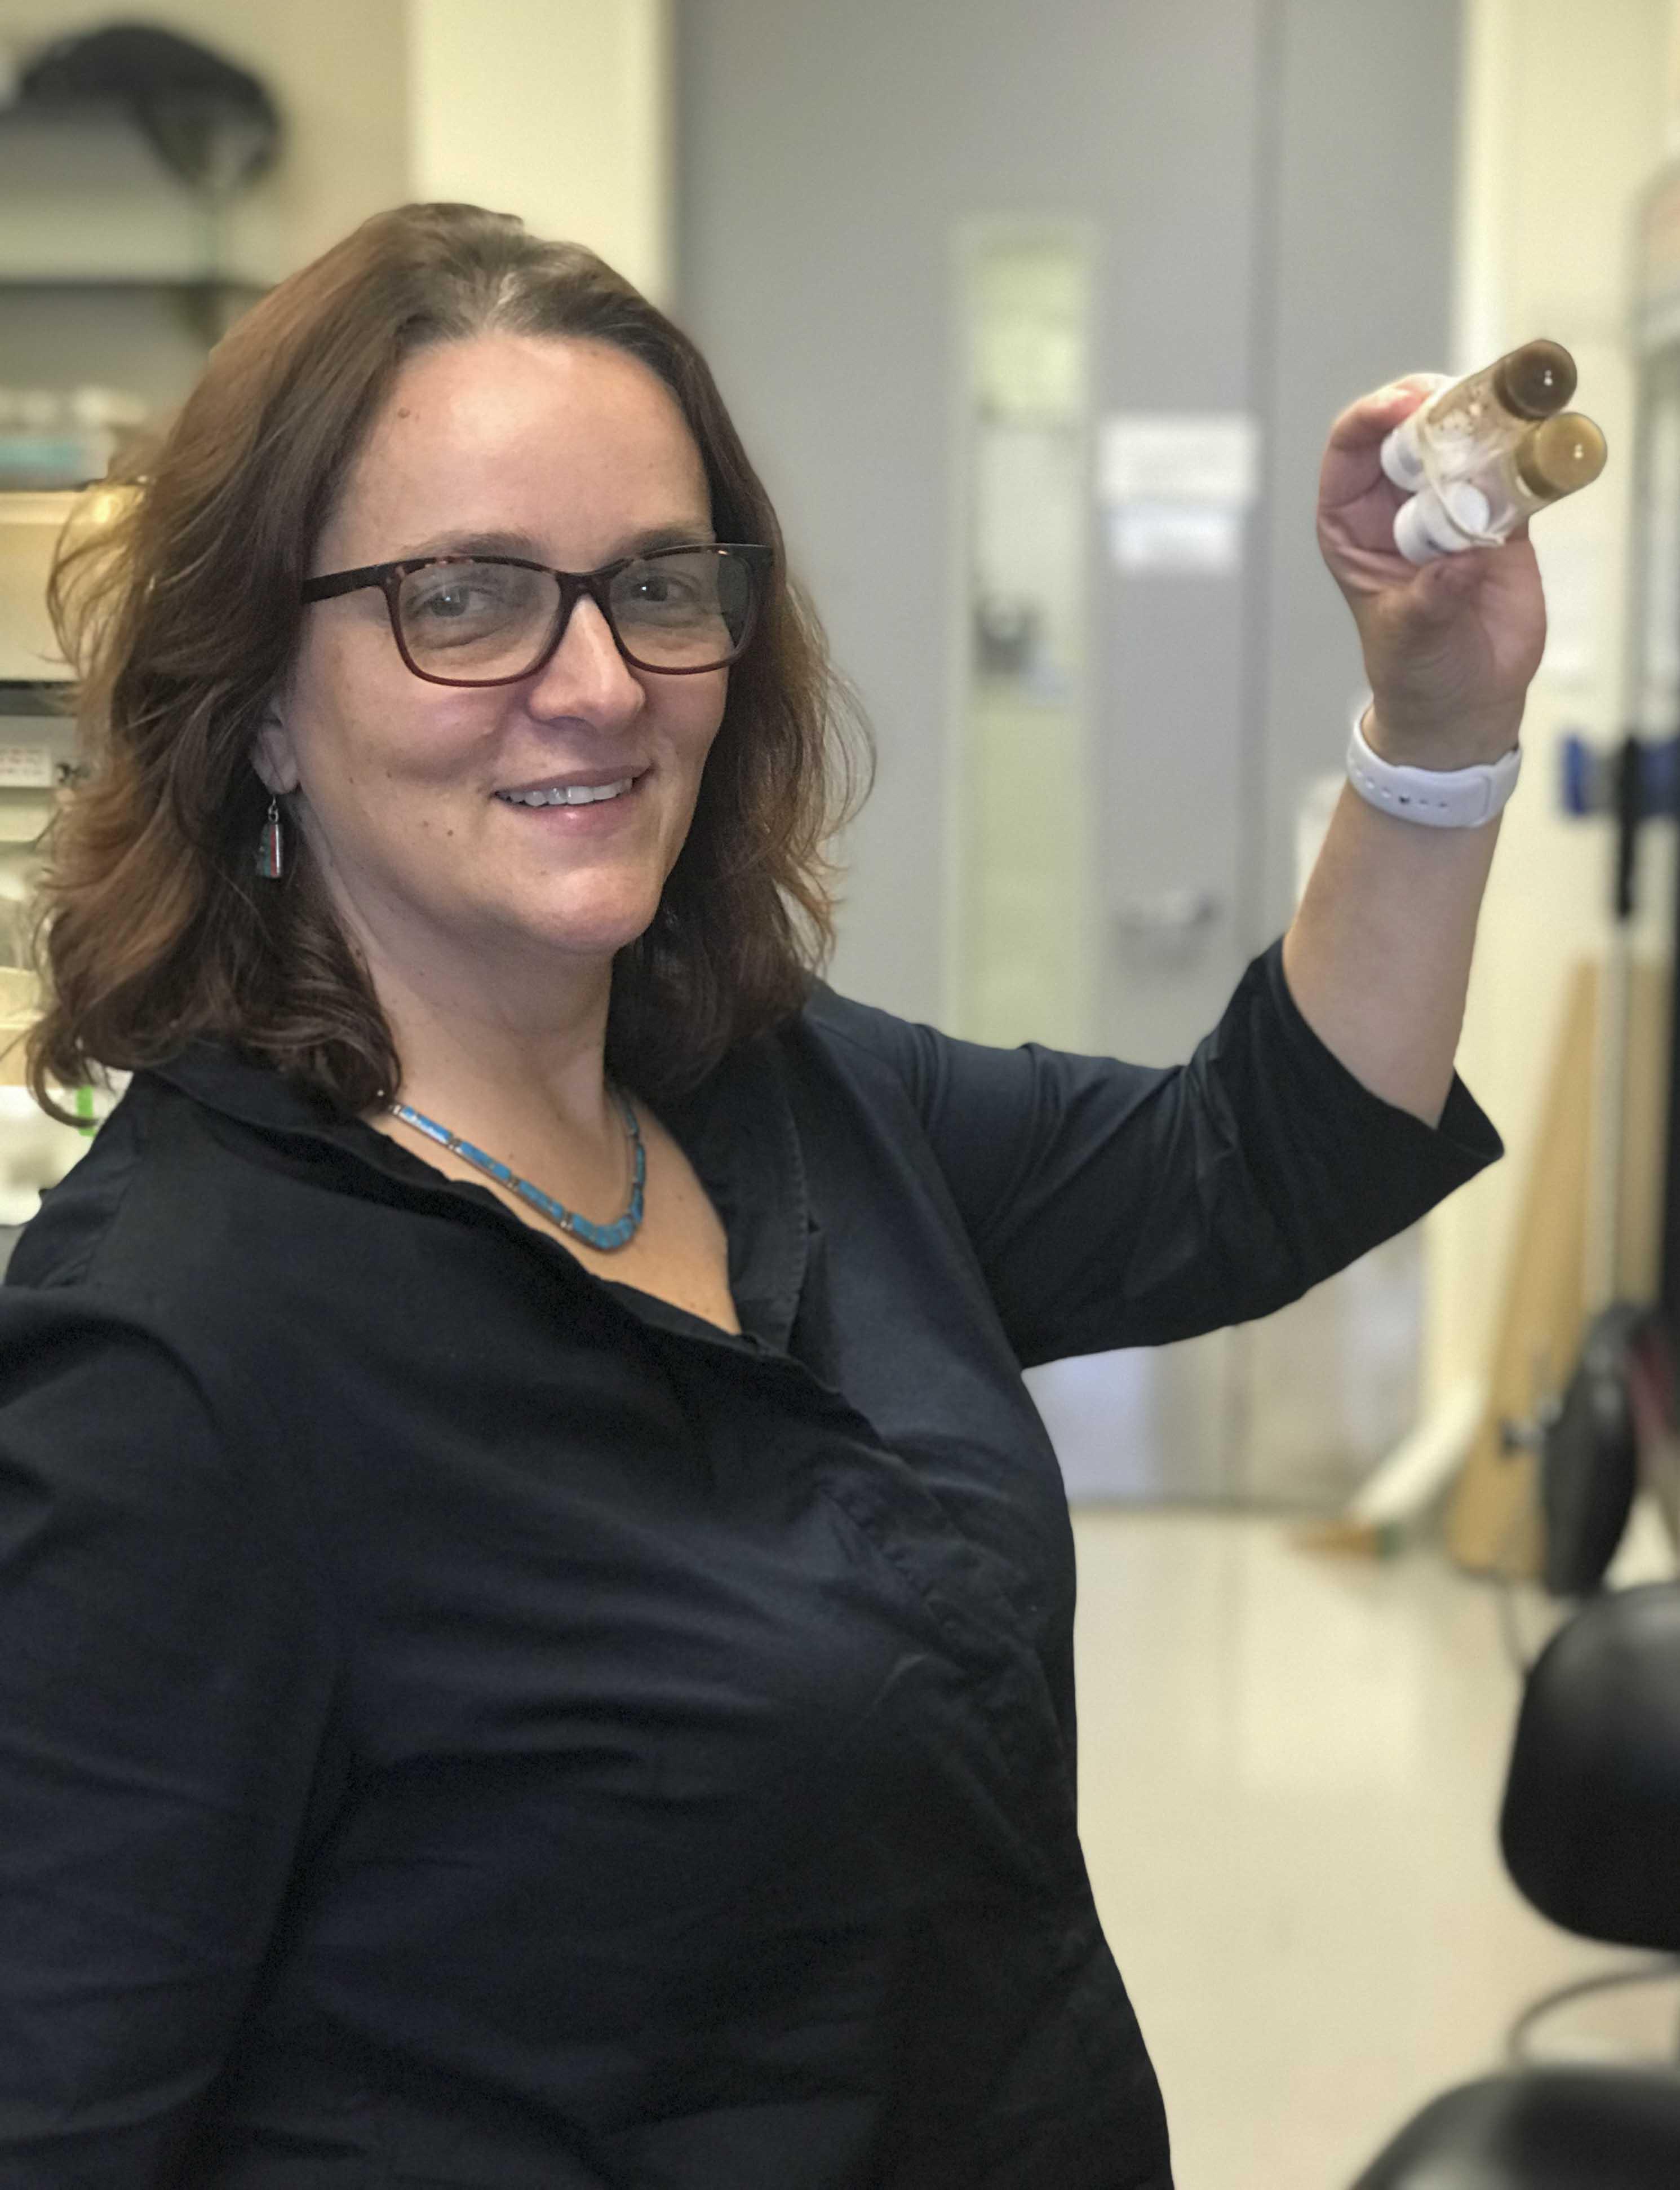 Dr. Daniela Zarnescu with model organism of fruit flies